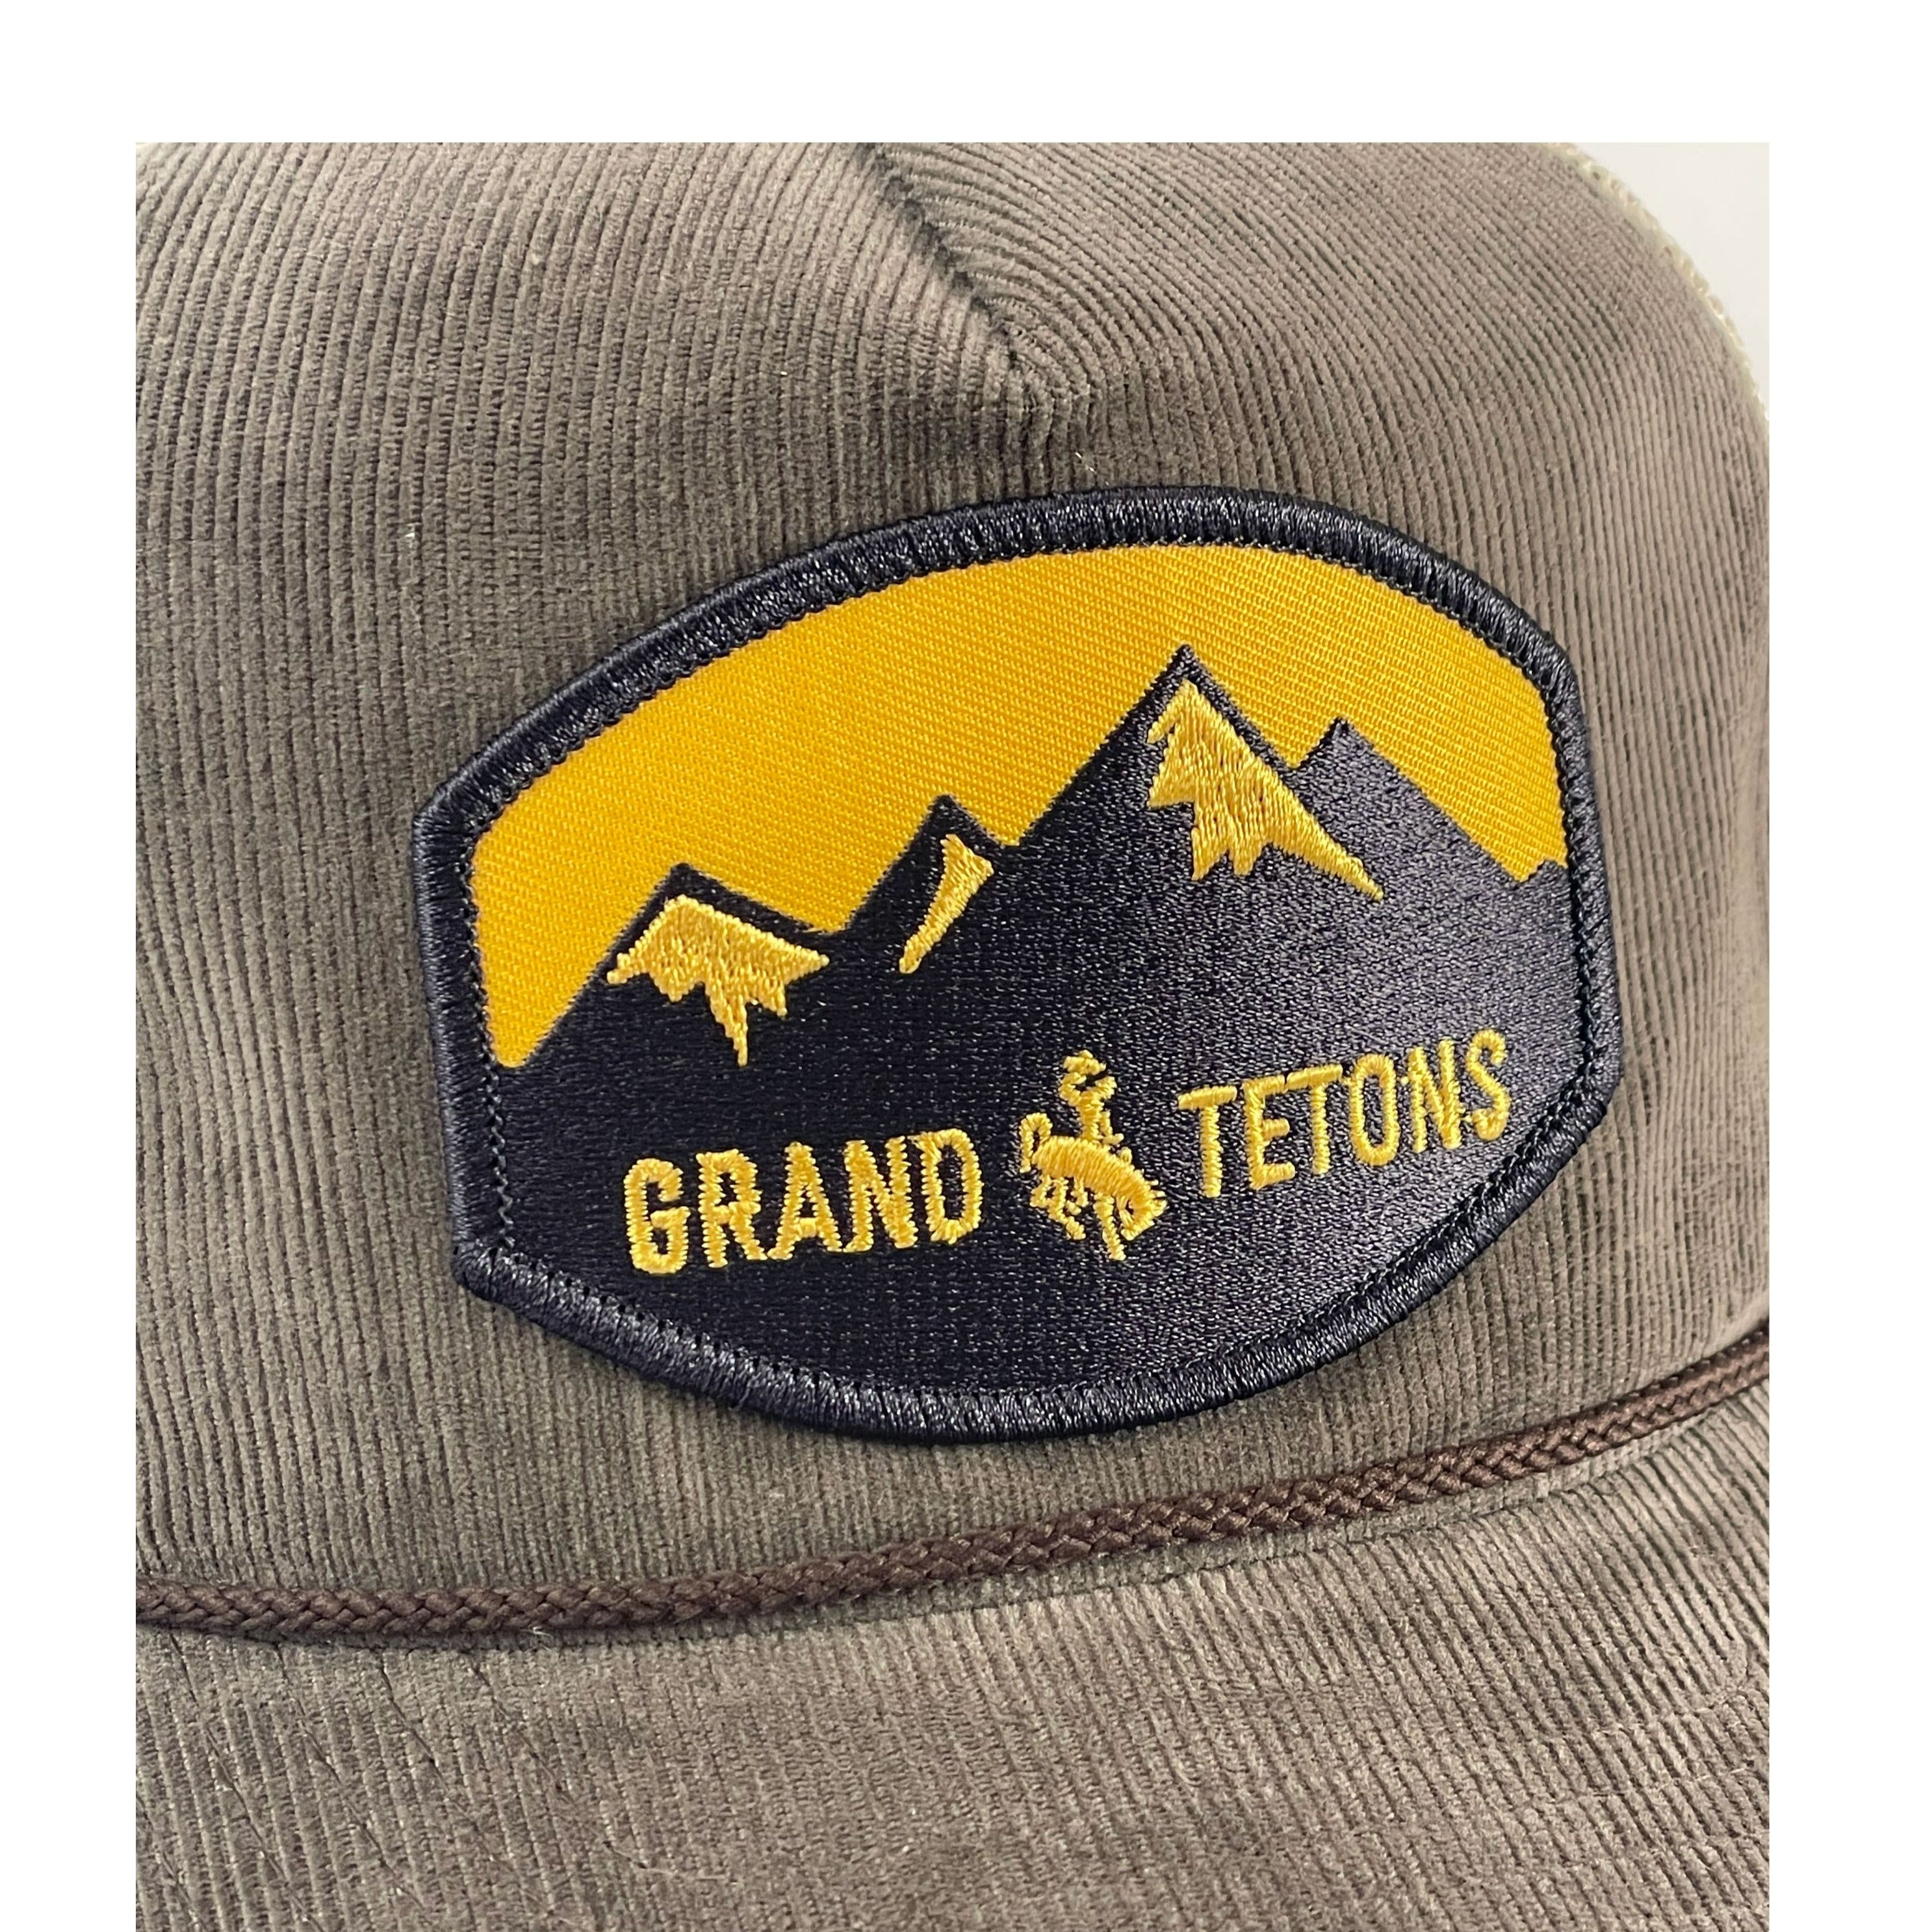 Brown Corduroy Grand Tetons Patch Trucker Hat